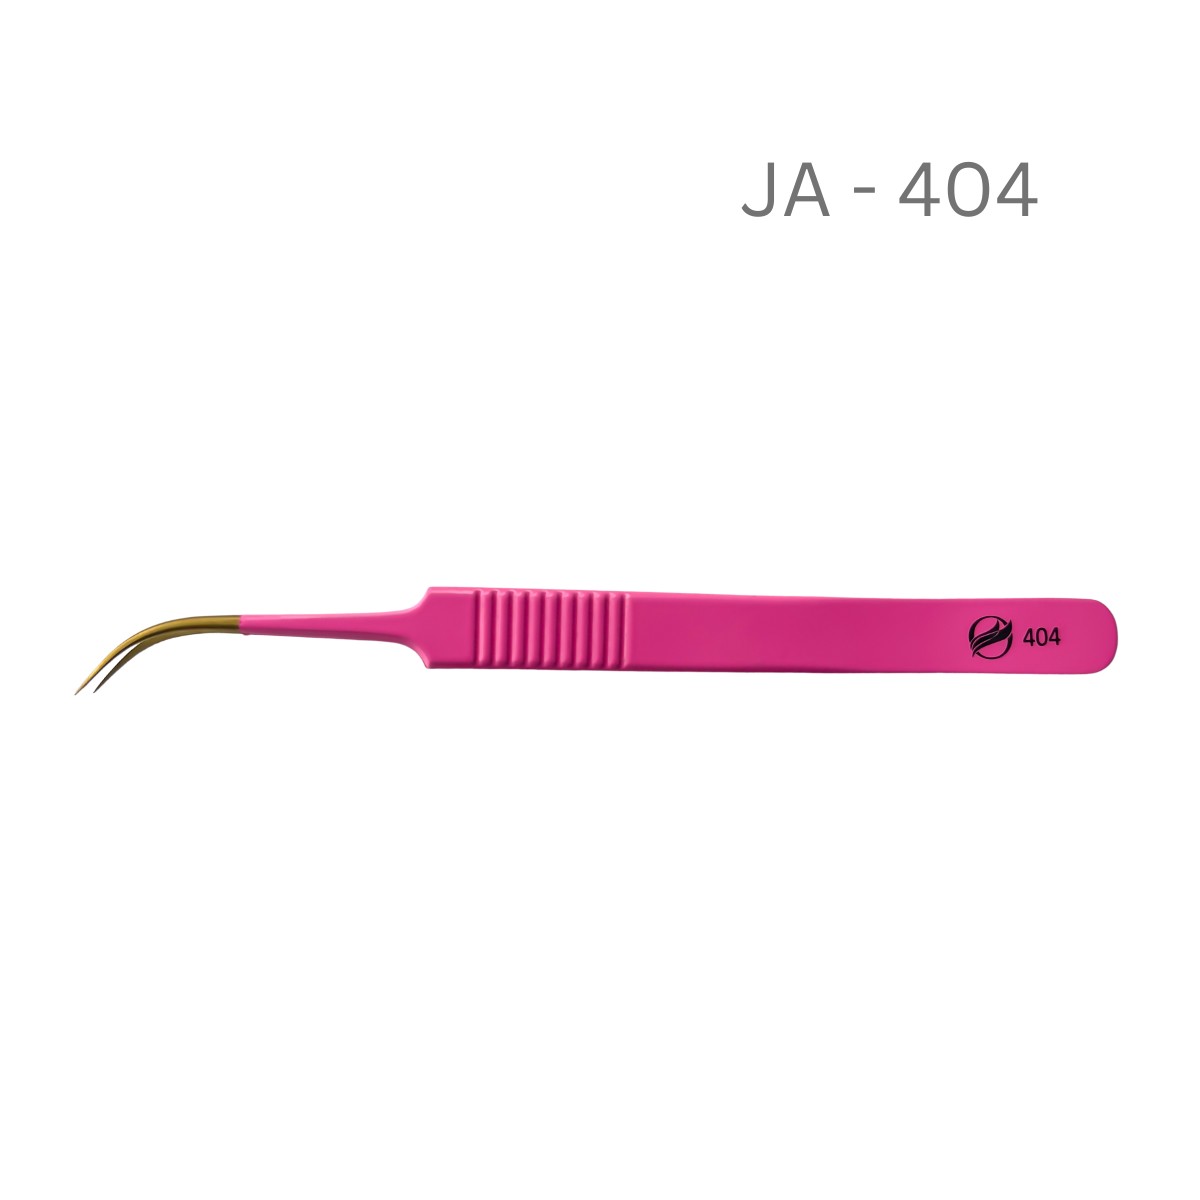 Pinzas JA-404, para volume